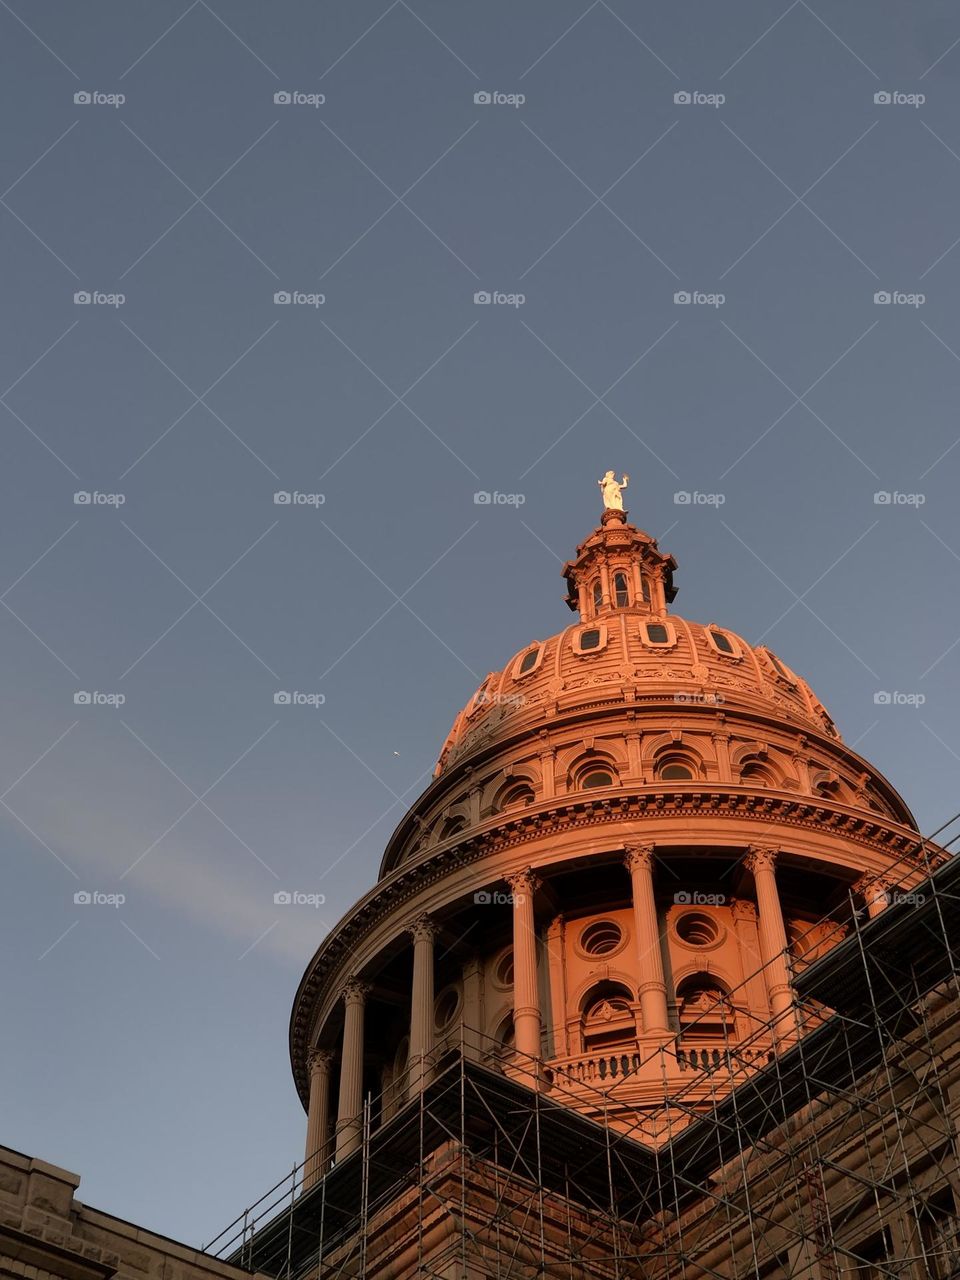 Capitol of Texas 